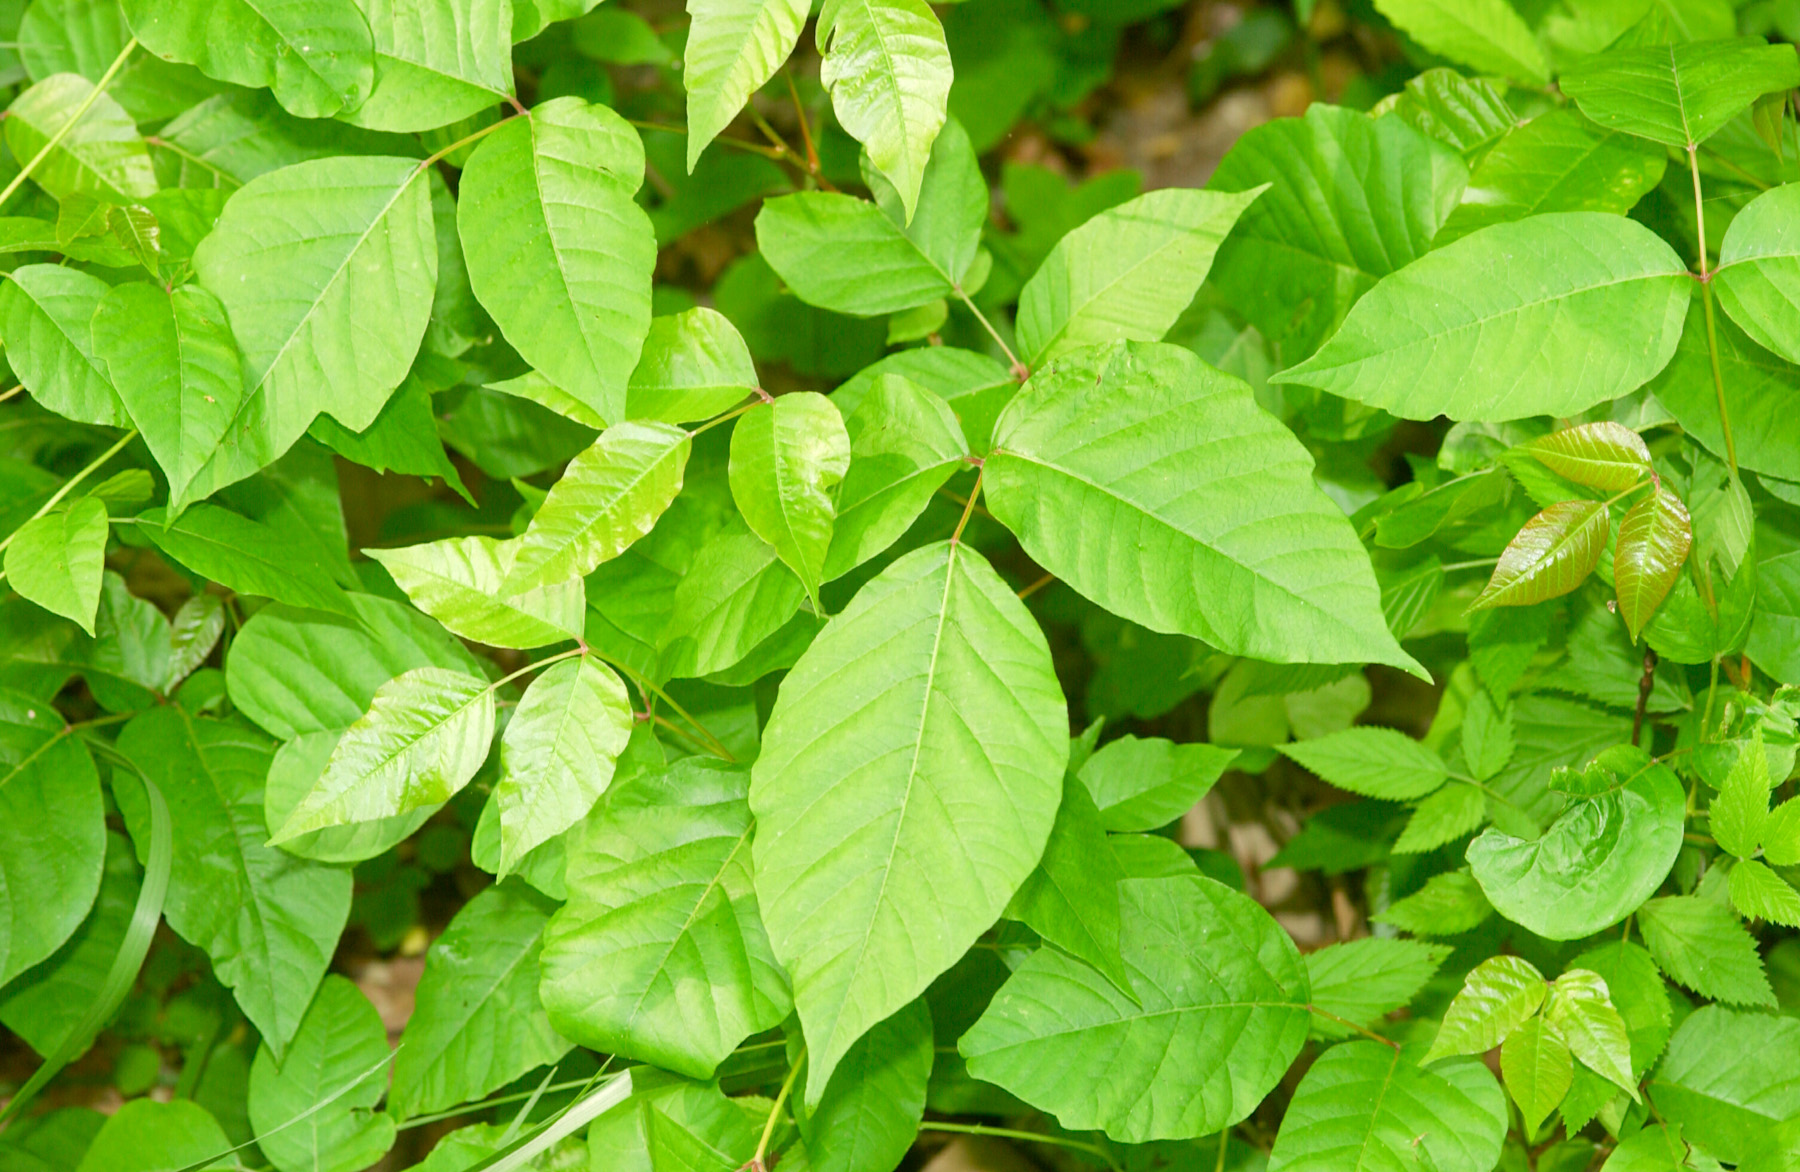 Poison ivy plants